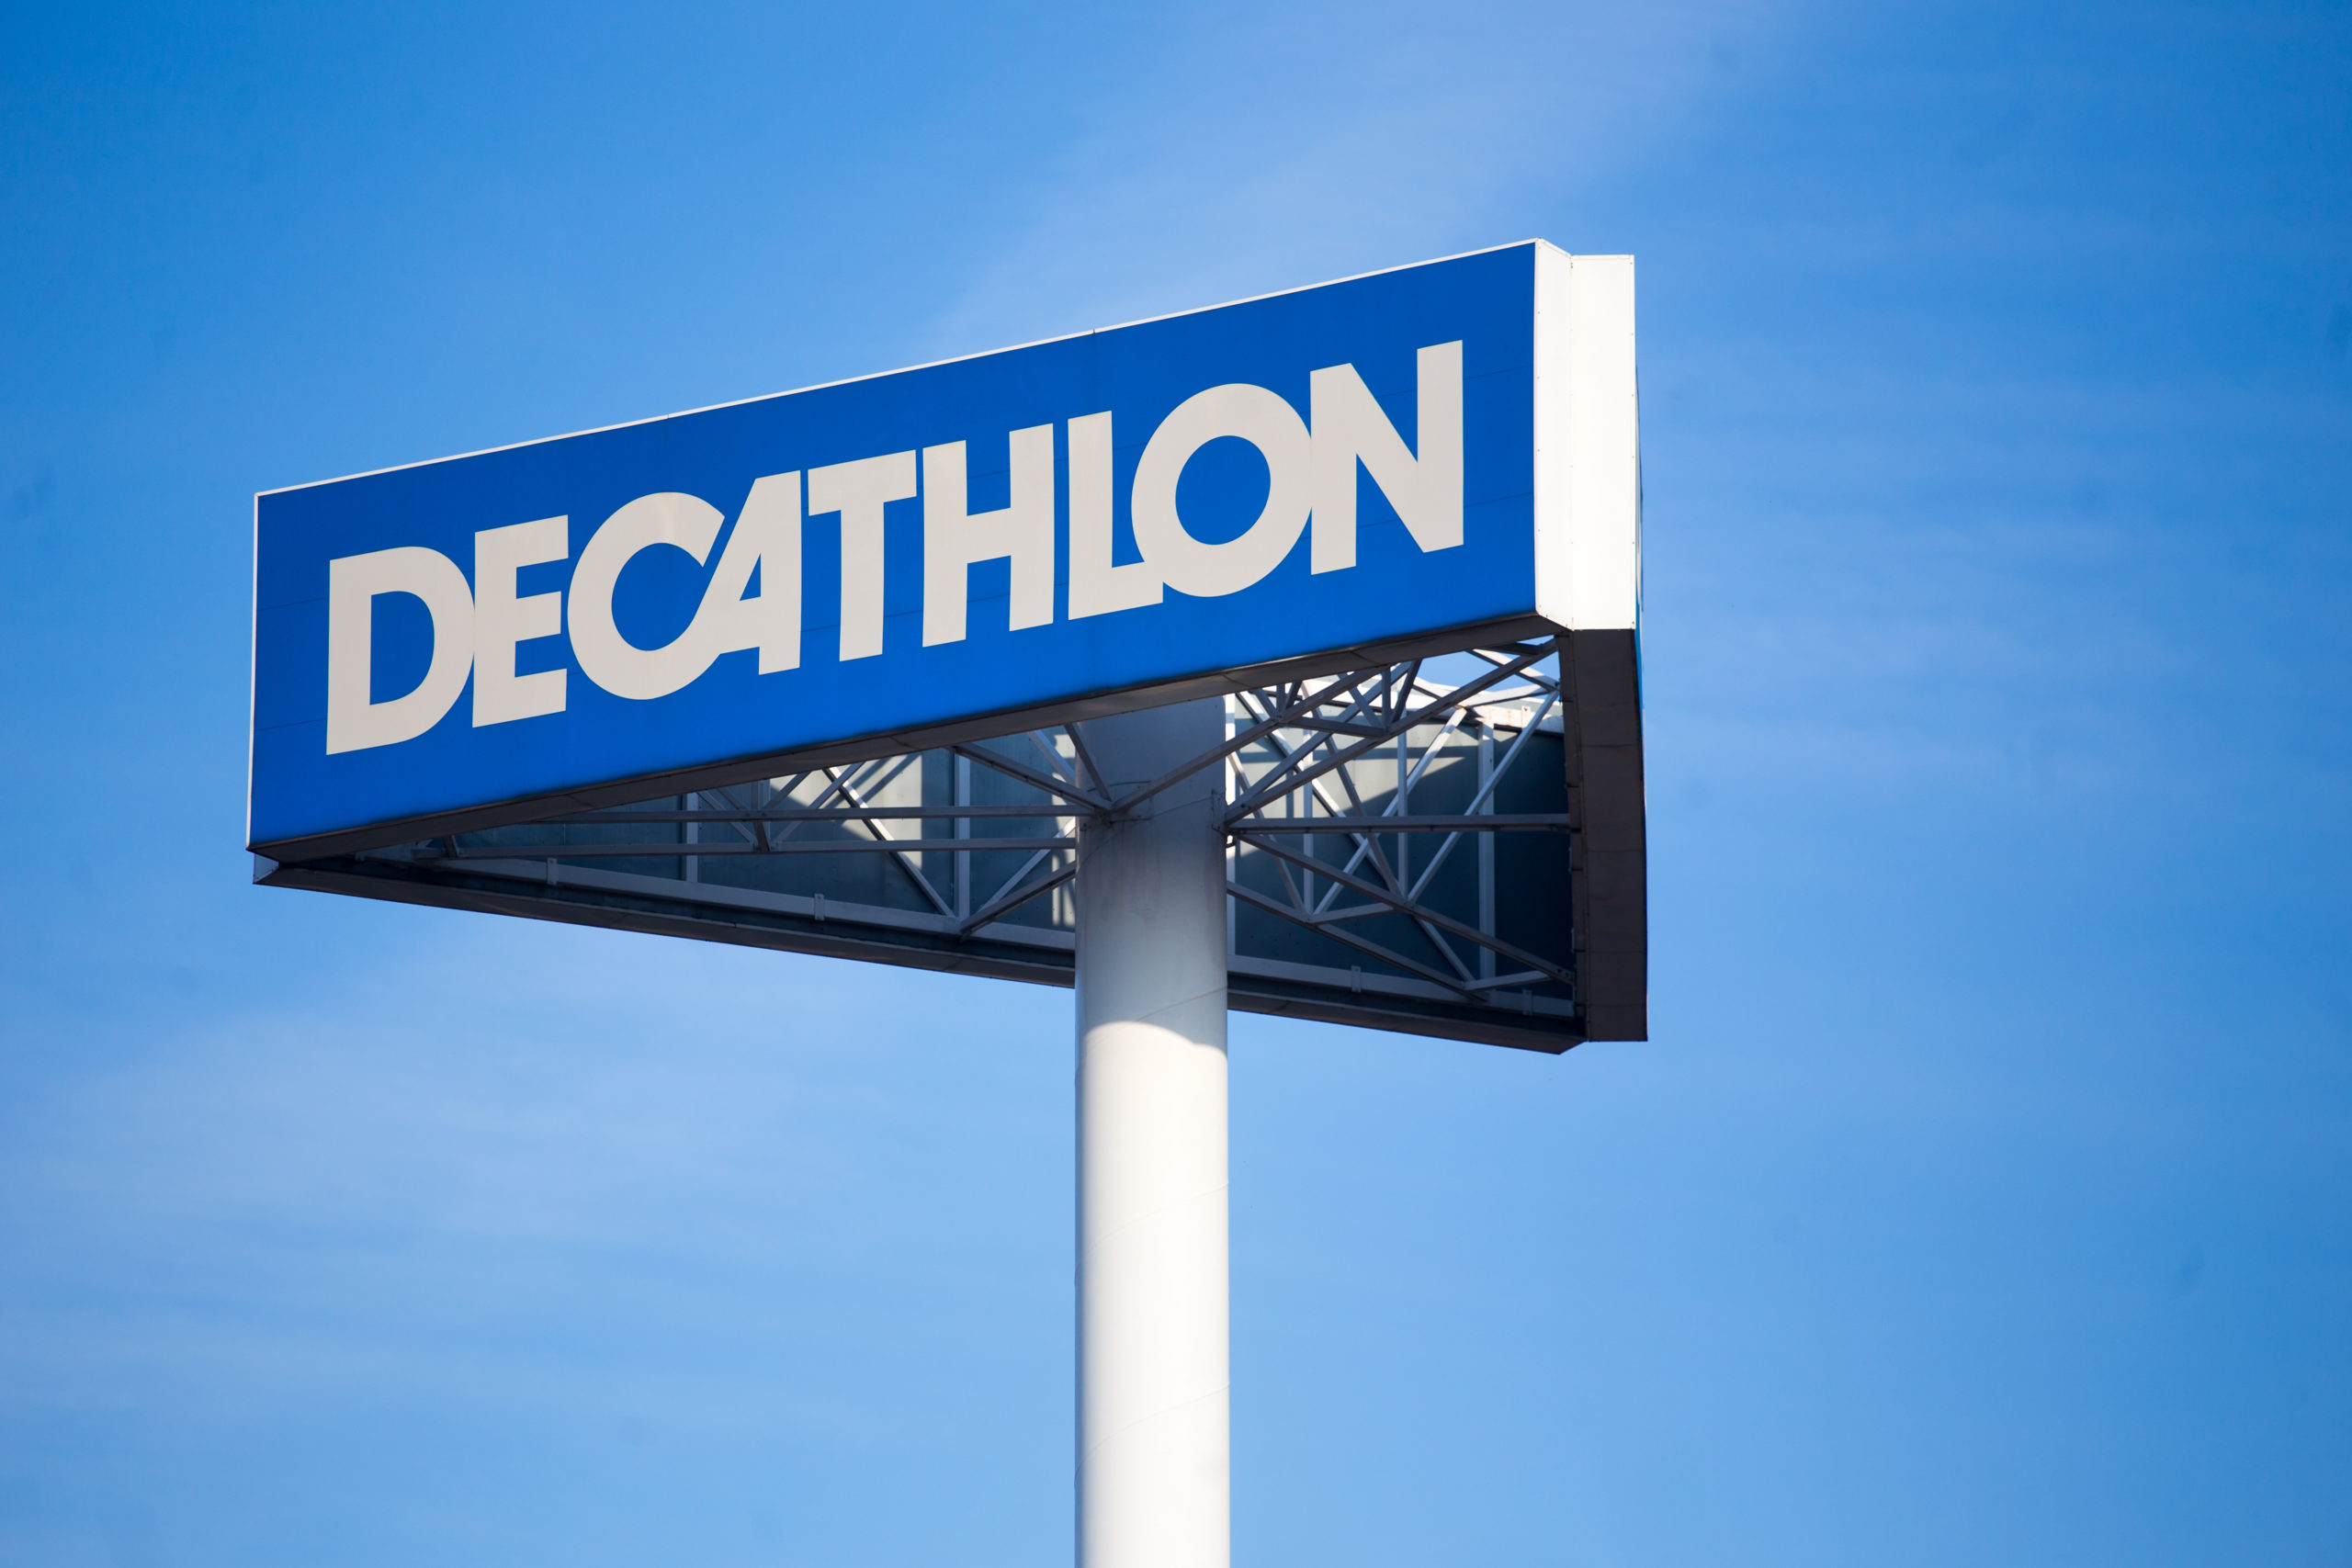 Decathlon encerrará atividade de lojas físicas nos Estados Unidos - MKT  Esportivo